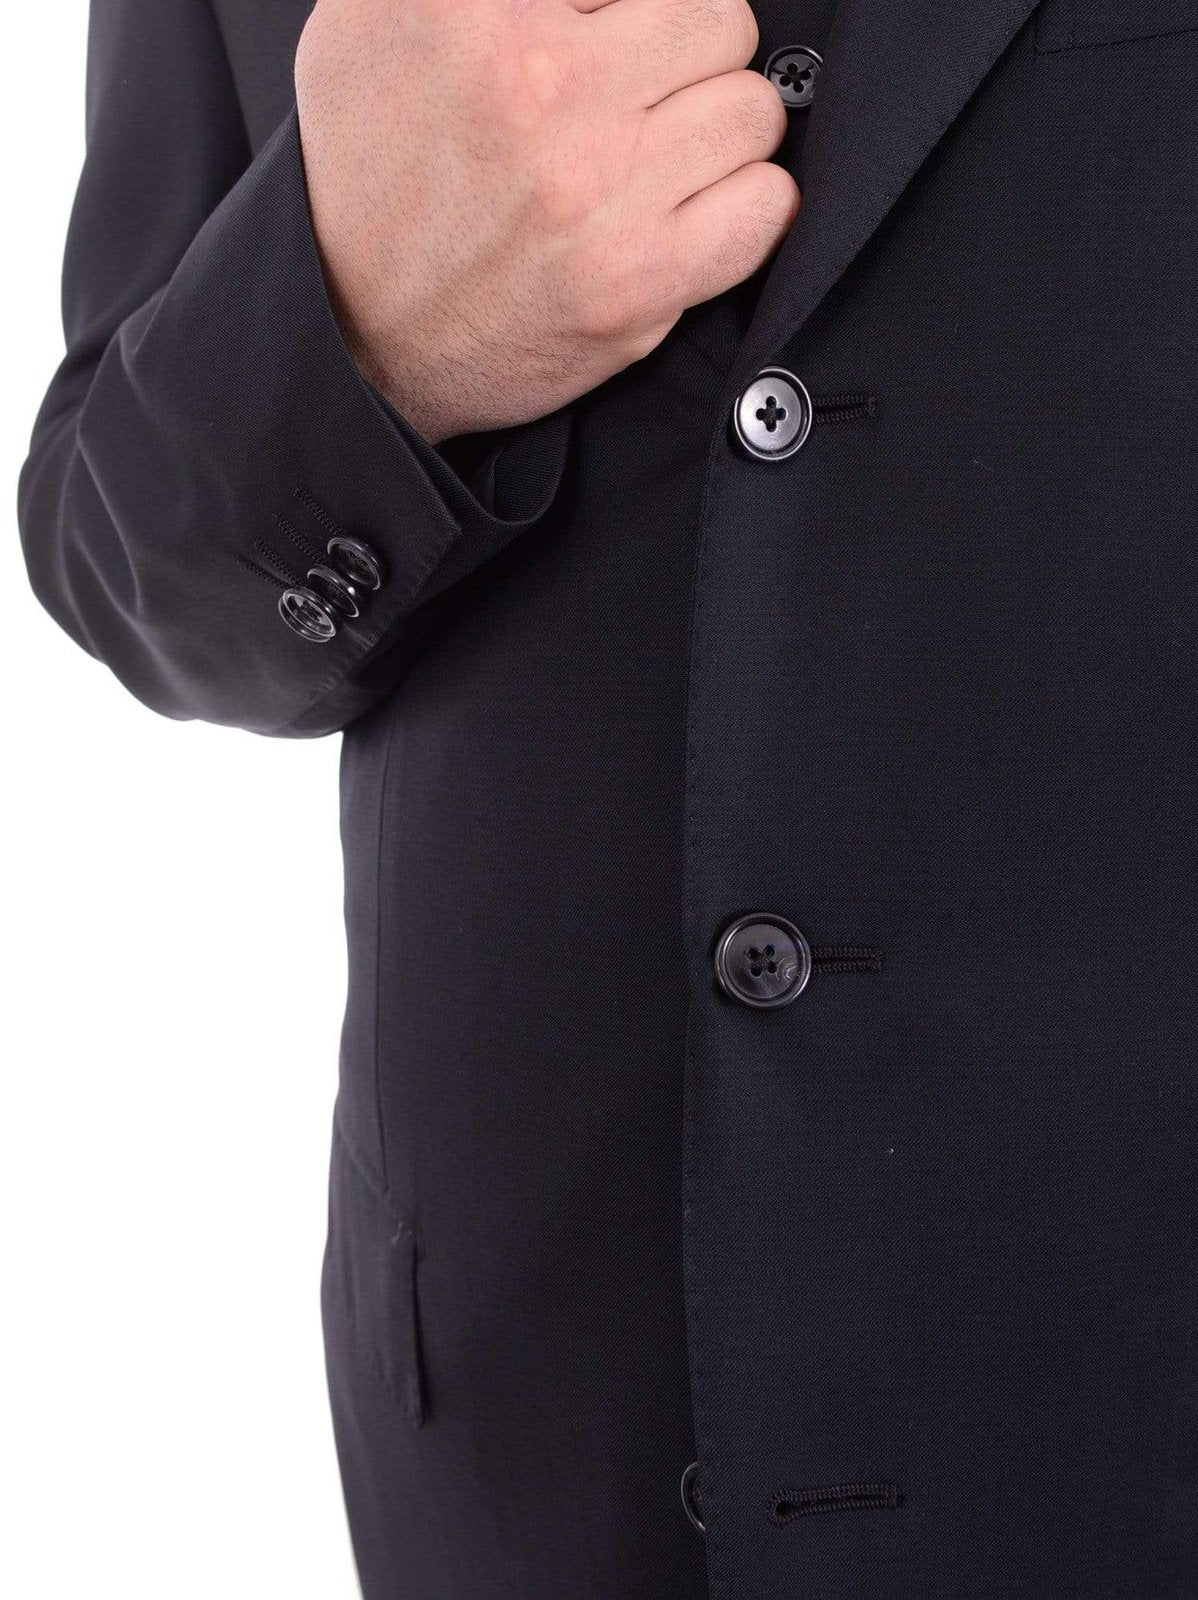 Corneliani THREE PIECE SUITS Corneliani 36r 46 Drop 6 Solid Navy Blue Three Button Three Piece Wool Suit